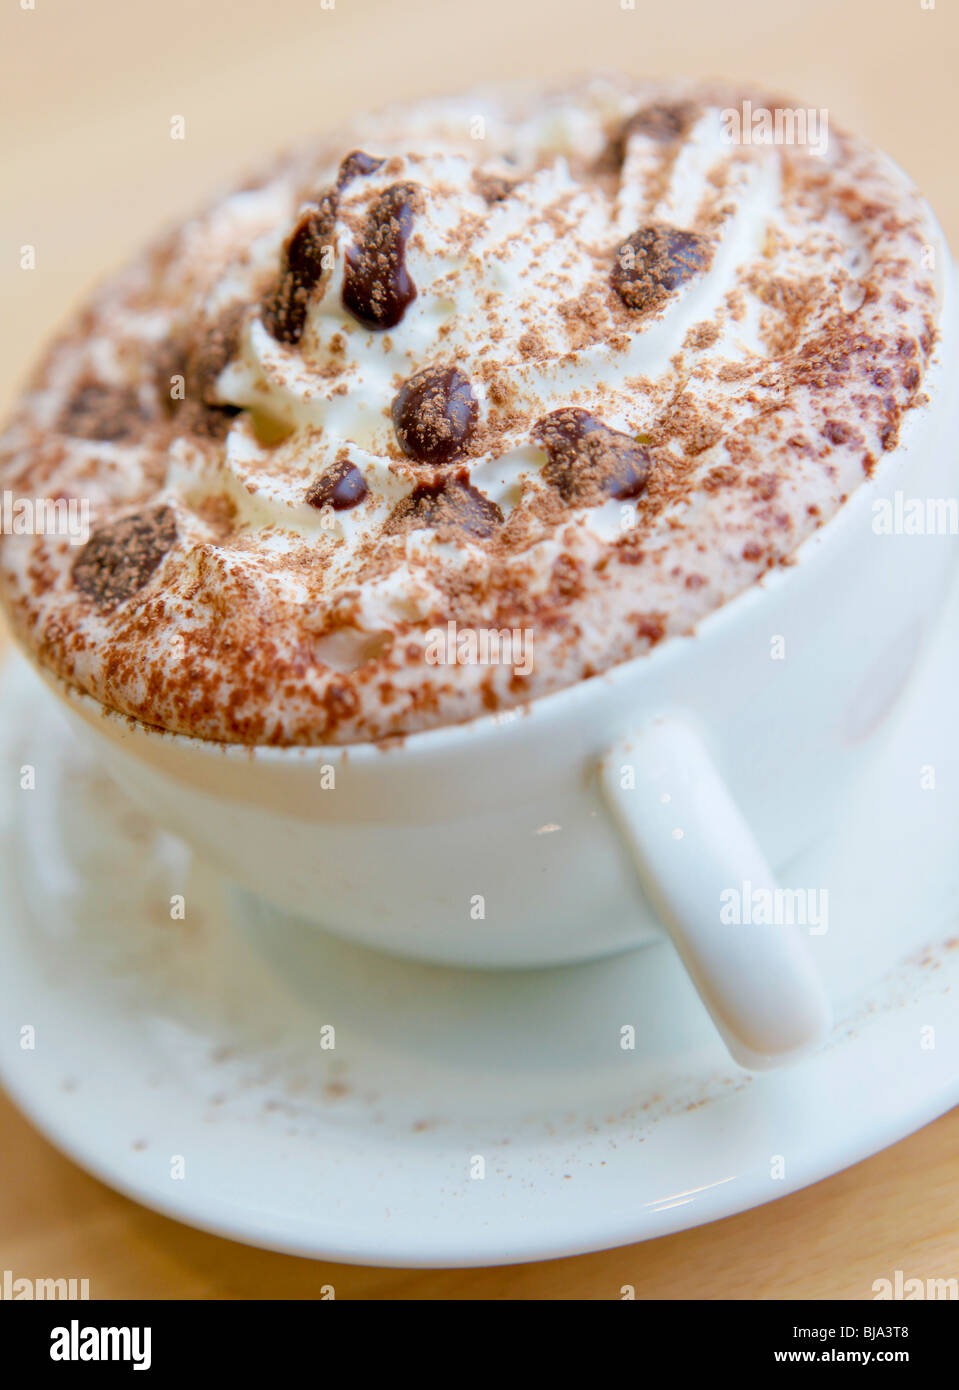 Hot chocolate with cream. Stock Photo